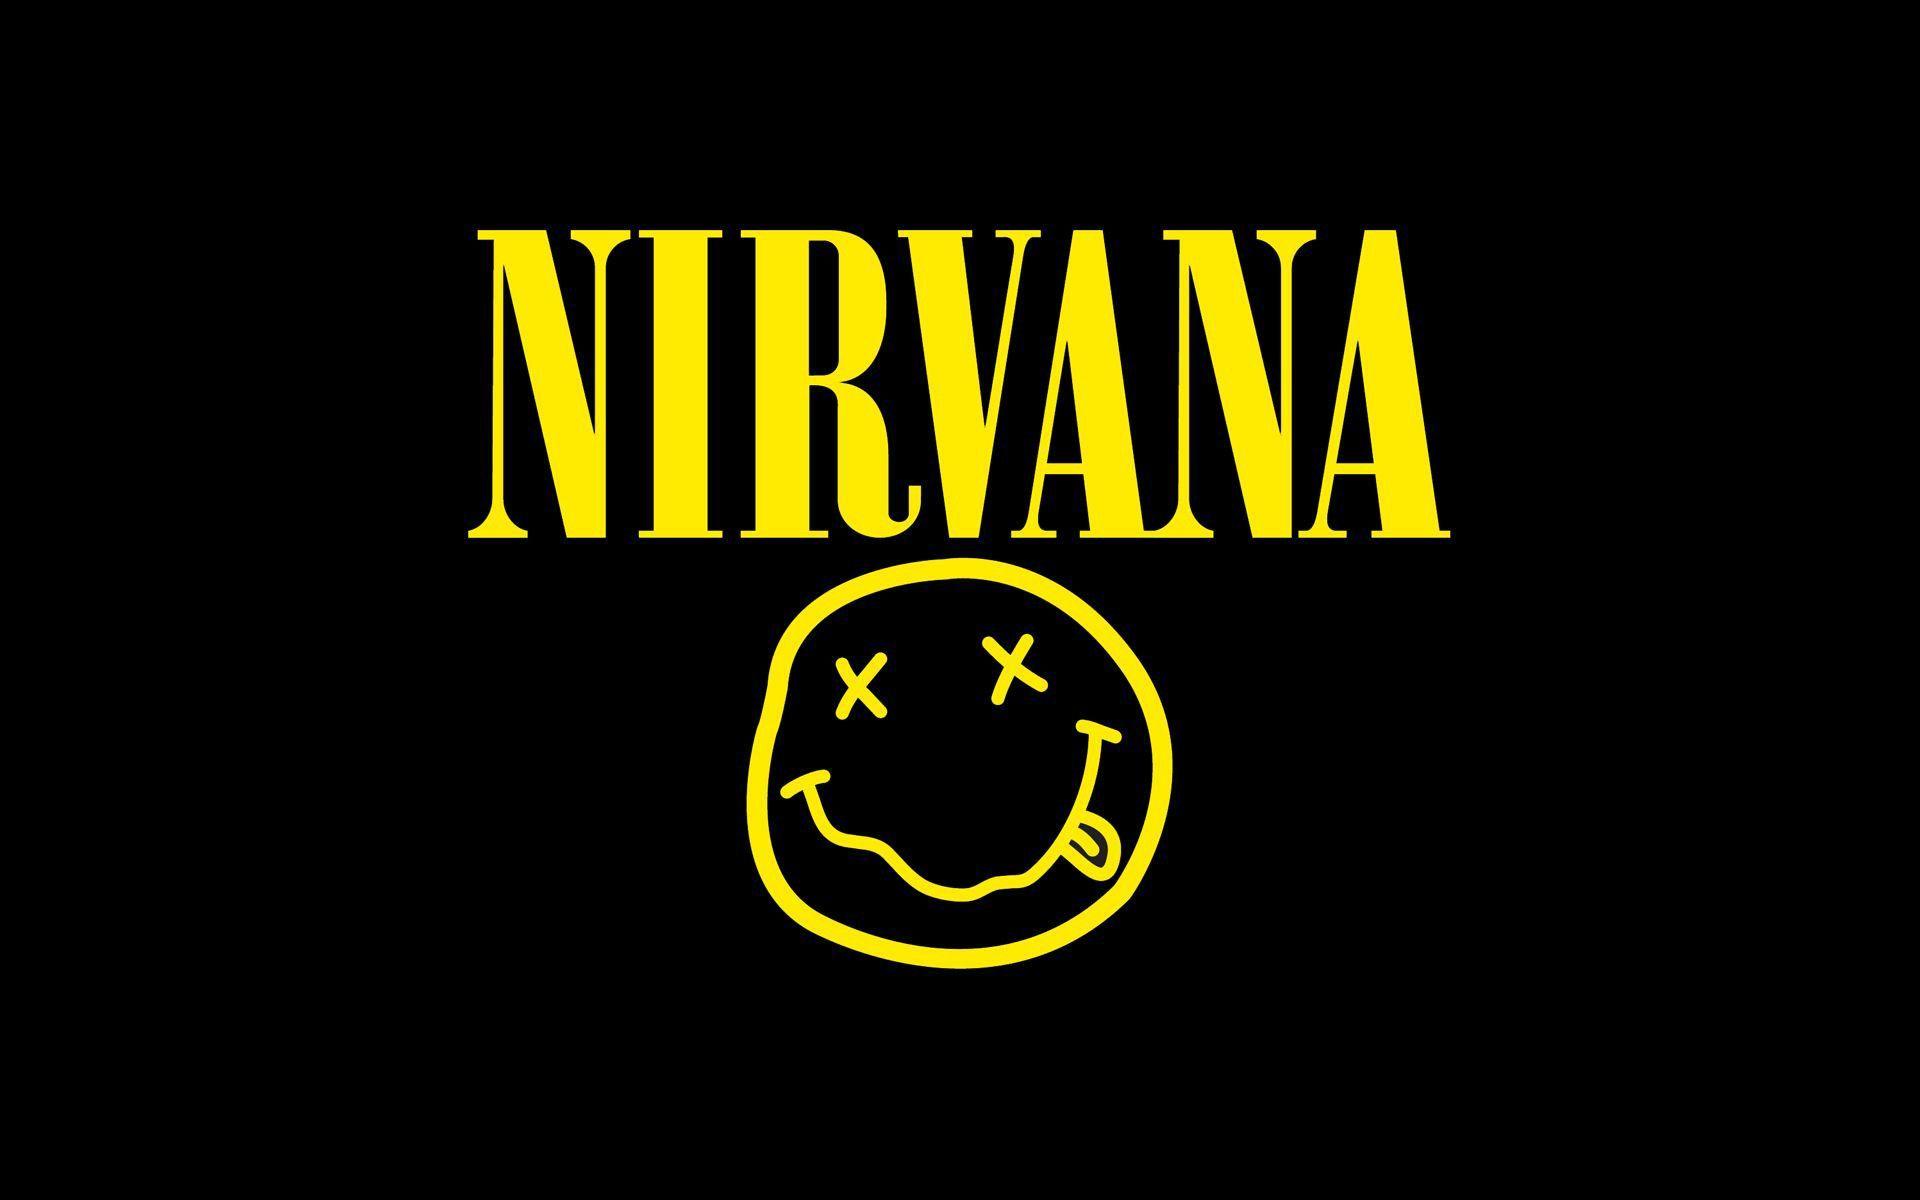 Nirvana Smiley Wallpaper